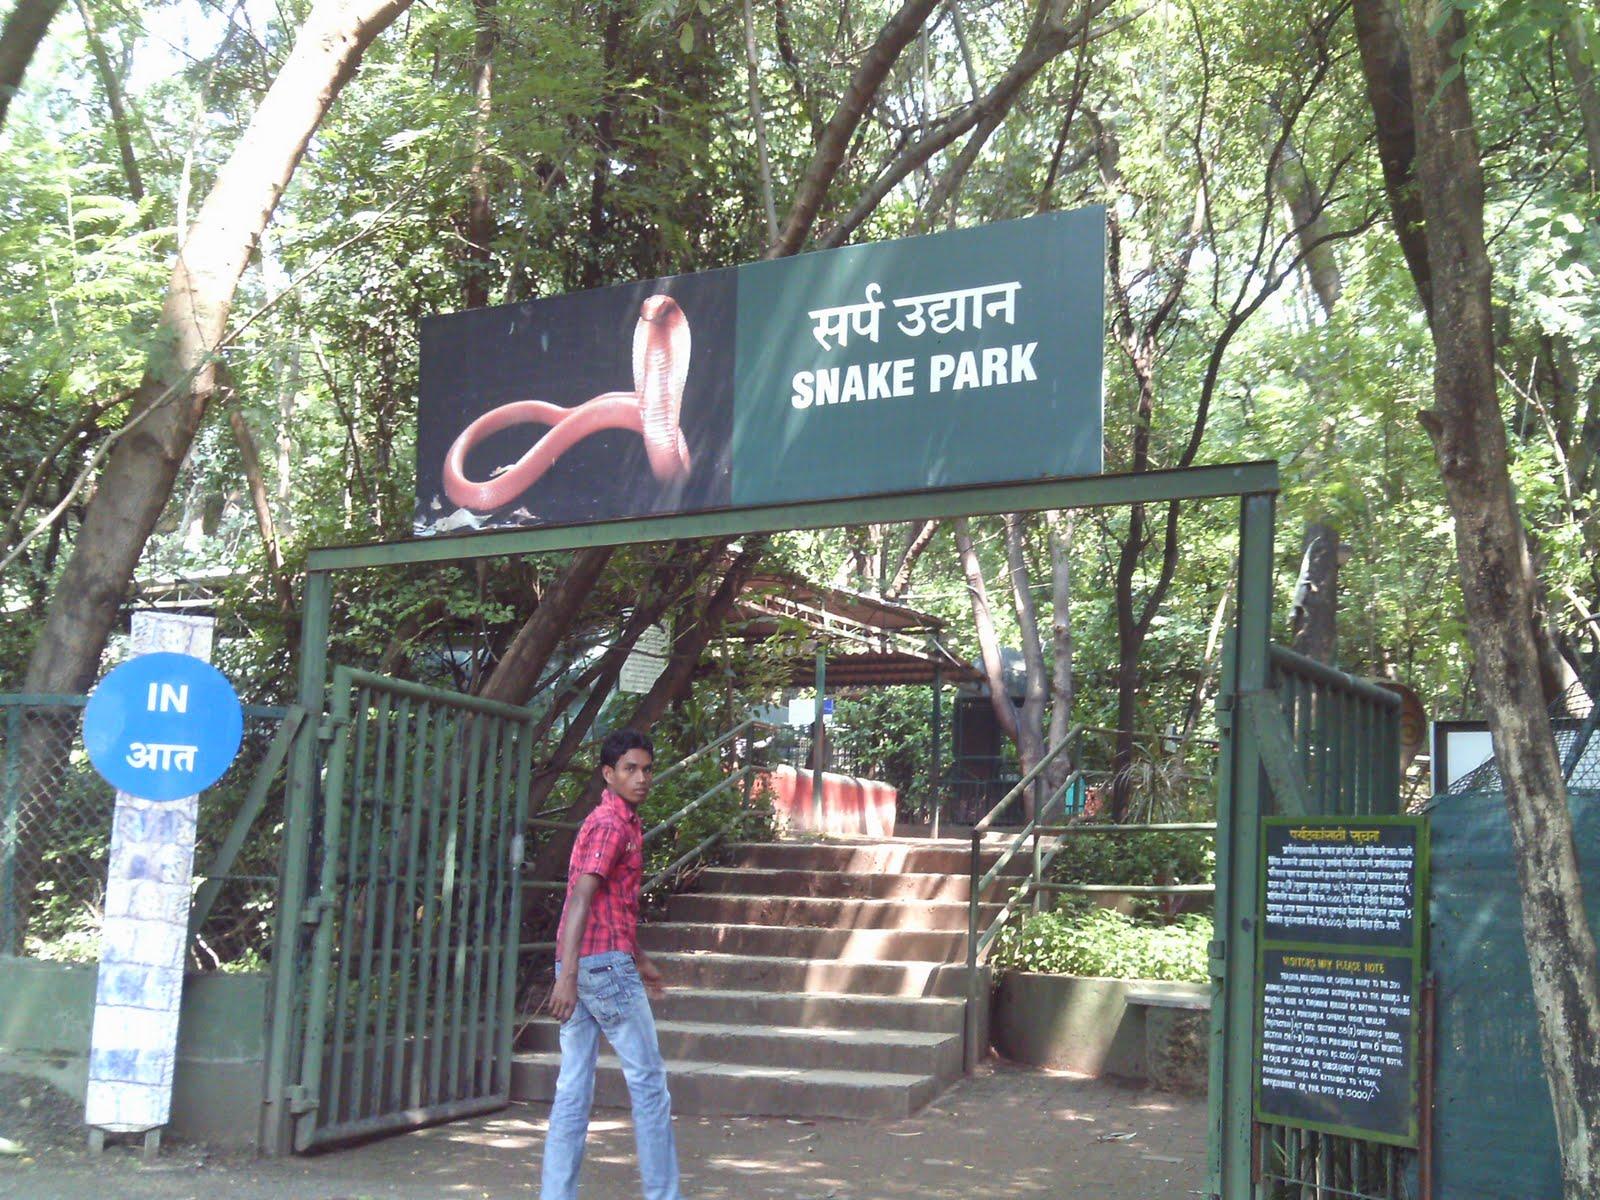 कटराज स्नेक पार्क, Katraj Zoo is one of the tourist places in pune